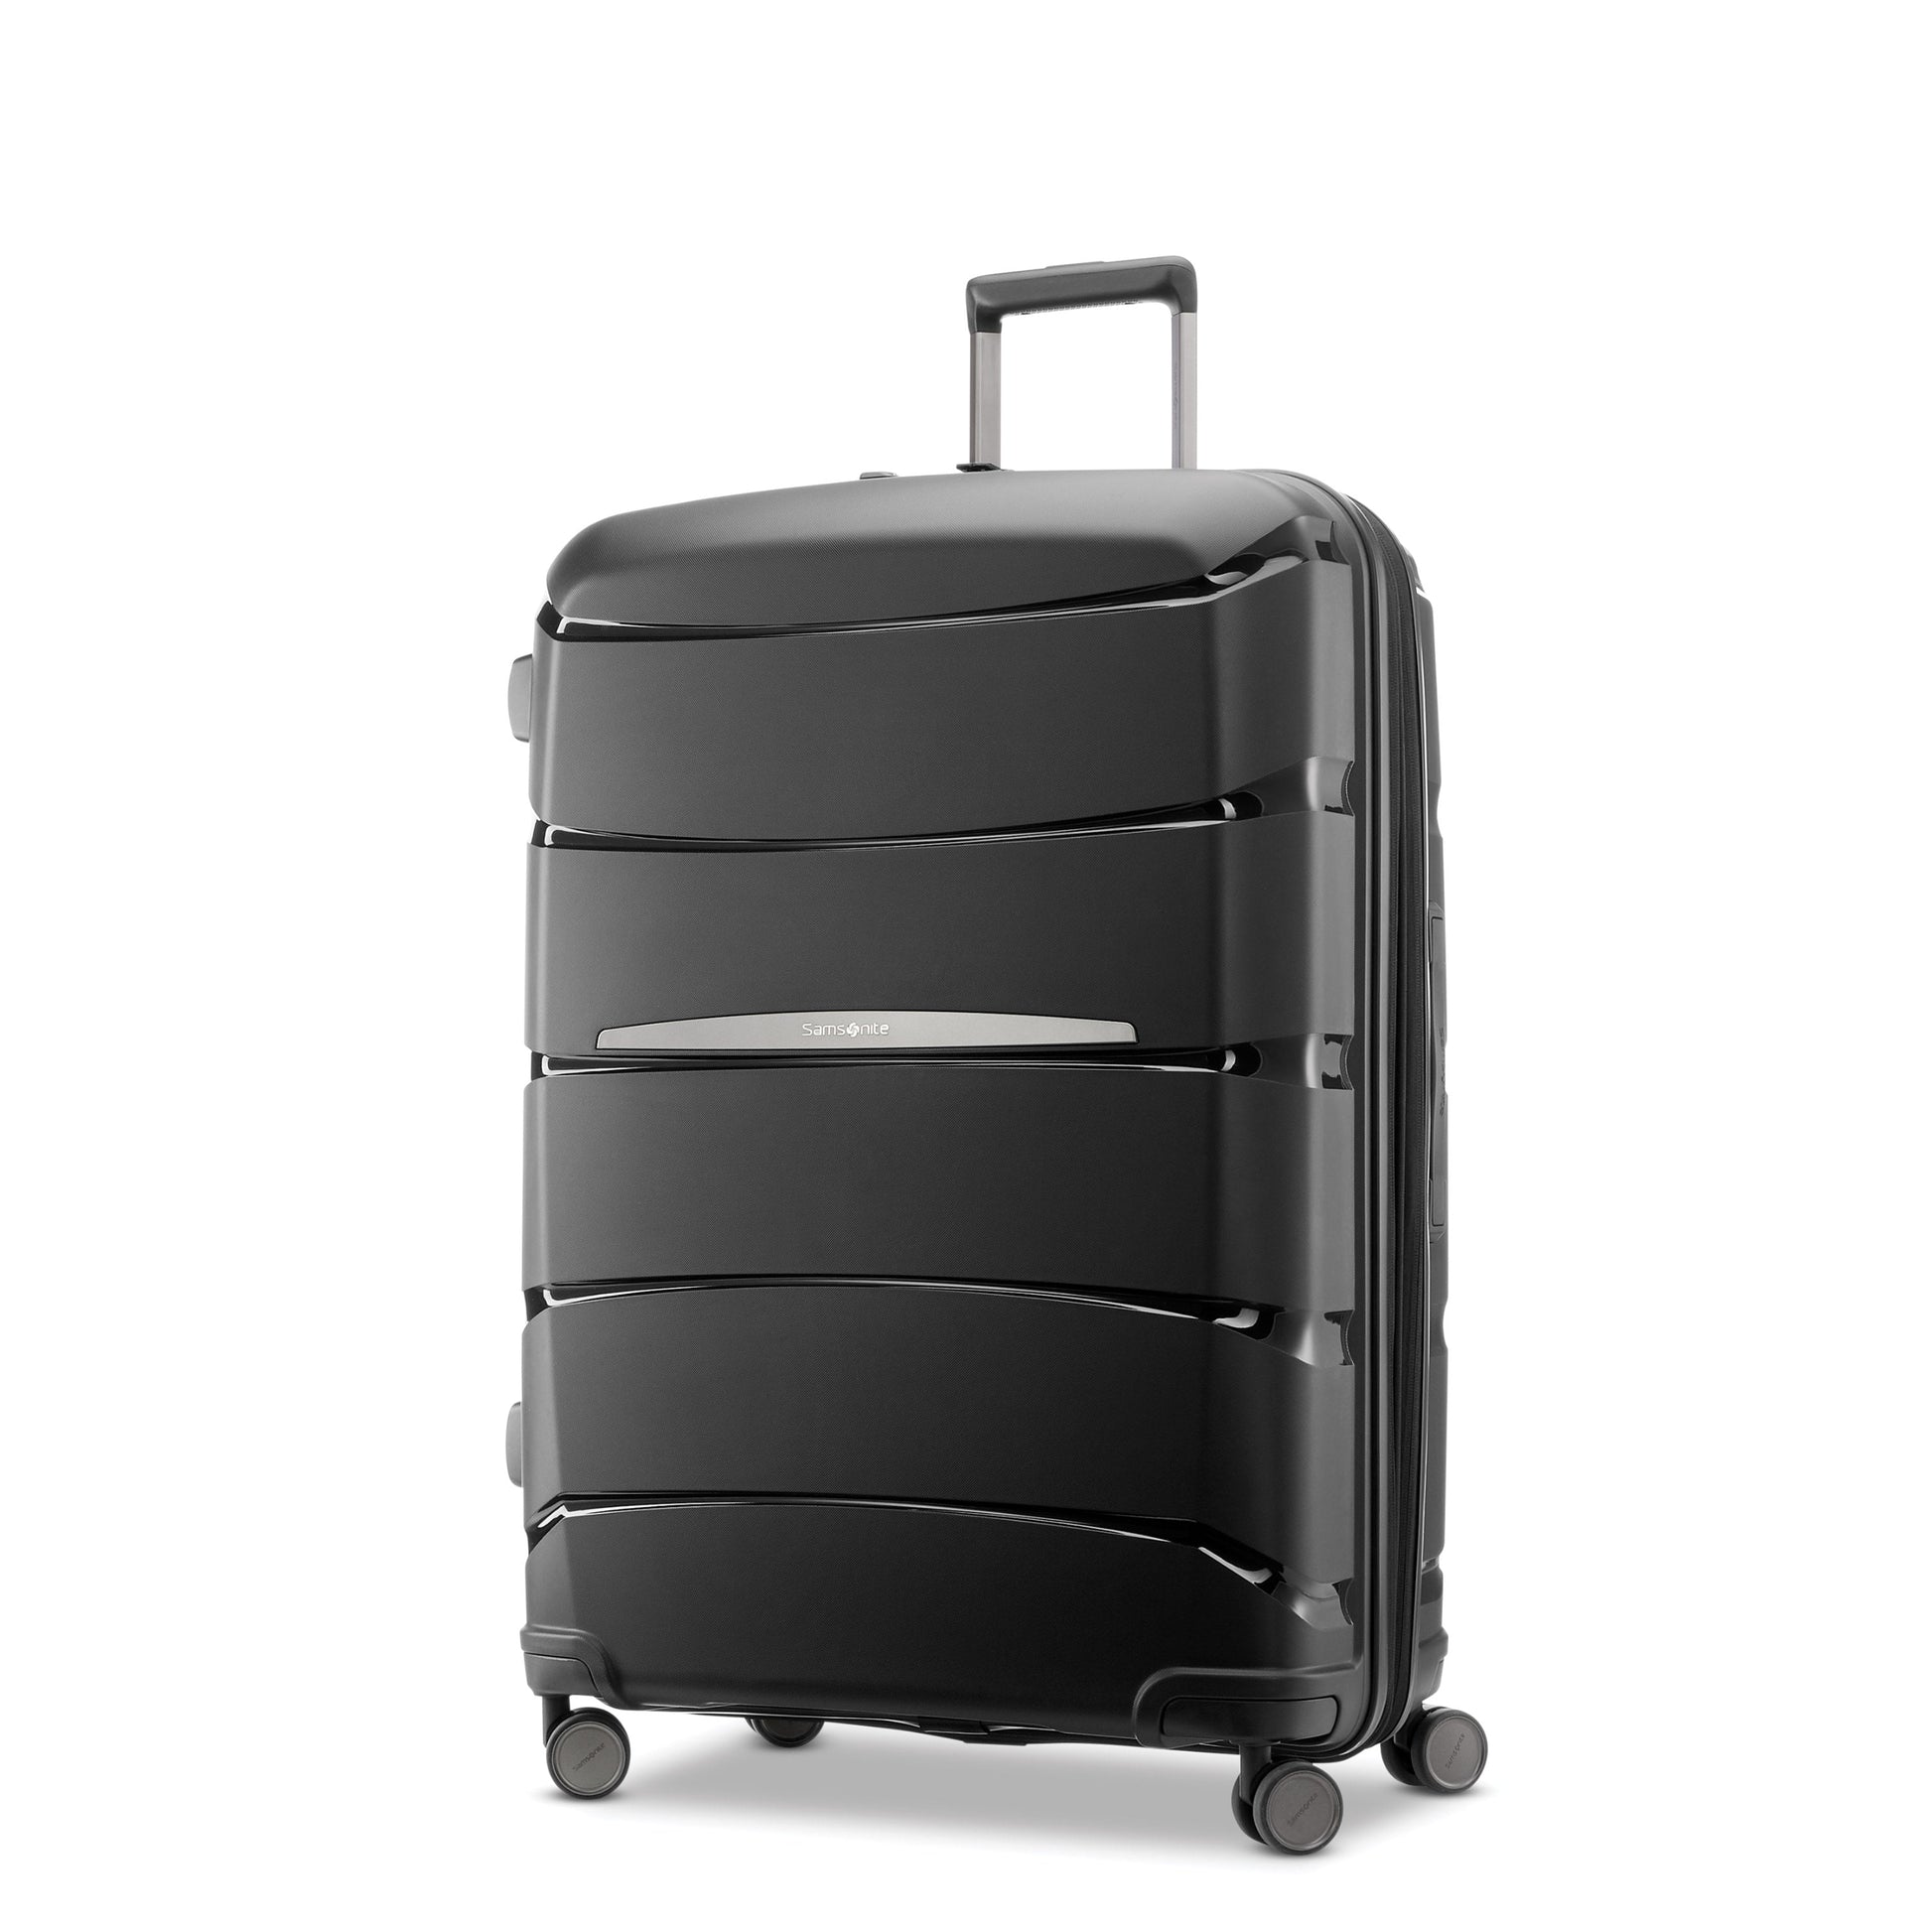 Samsonite Outline Pro Large Expandable Spinner Luggage - Midnight Black